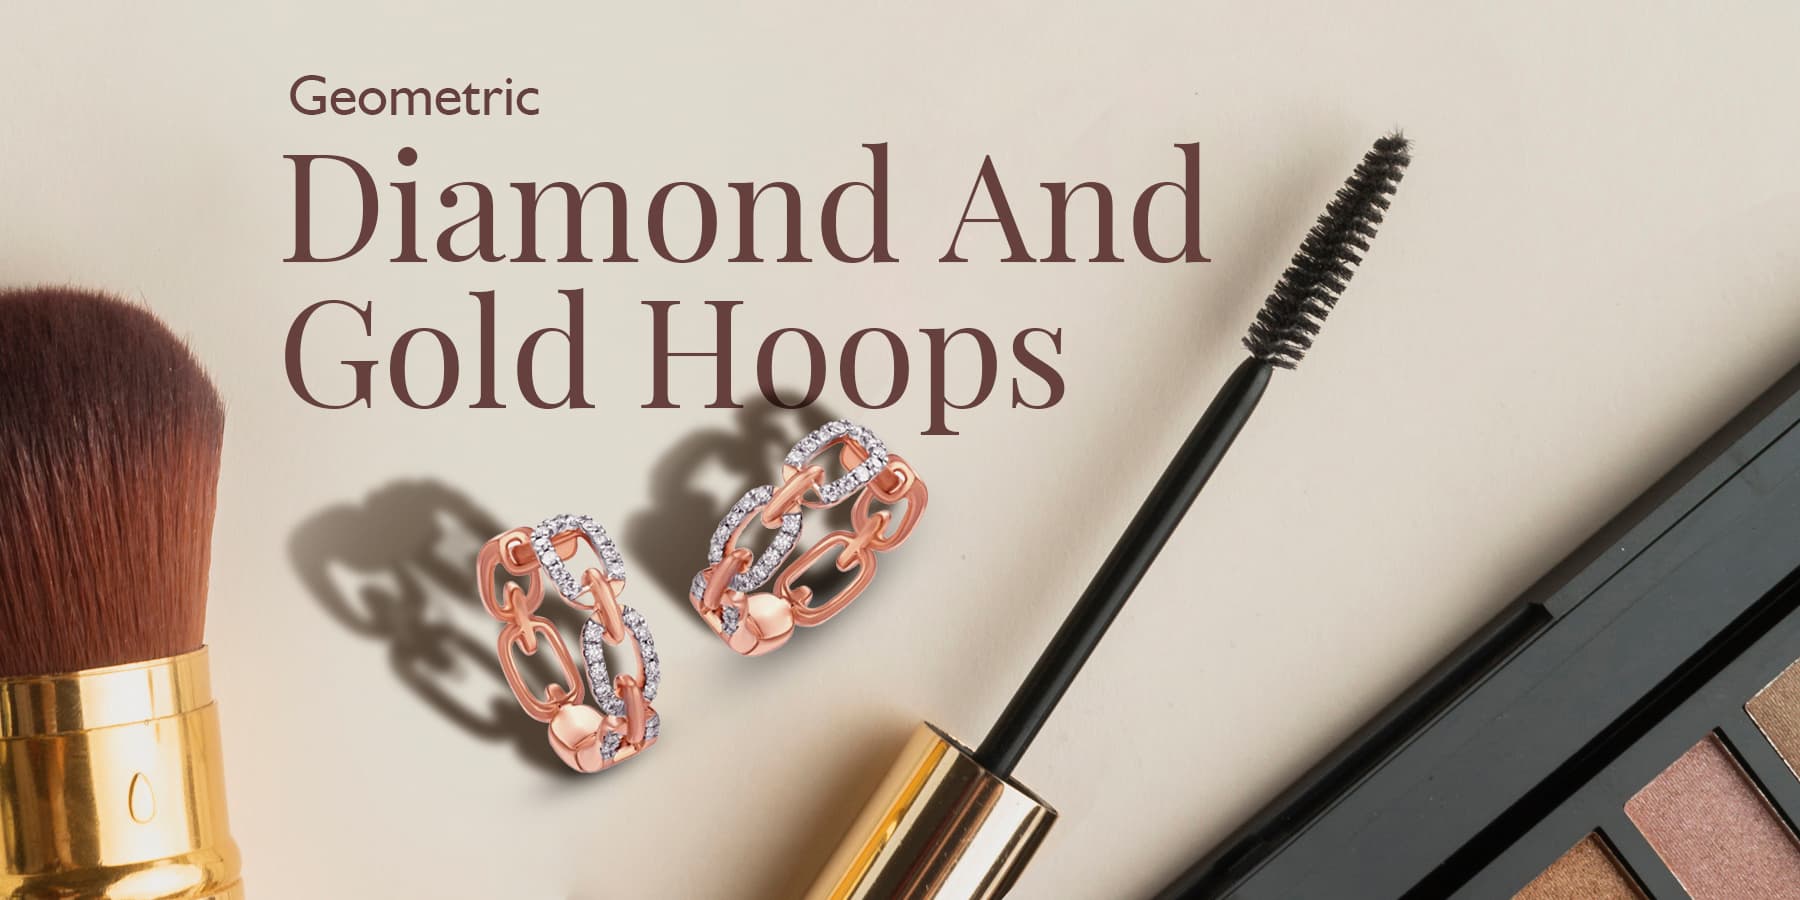 Geometric Diamond And Gold Hoops